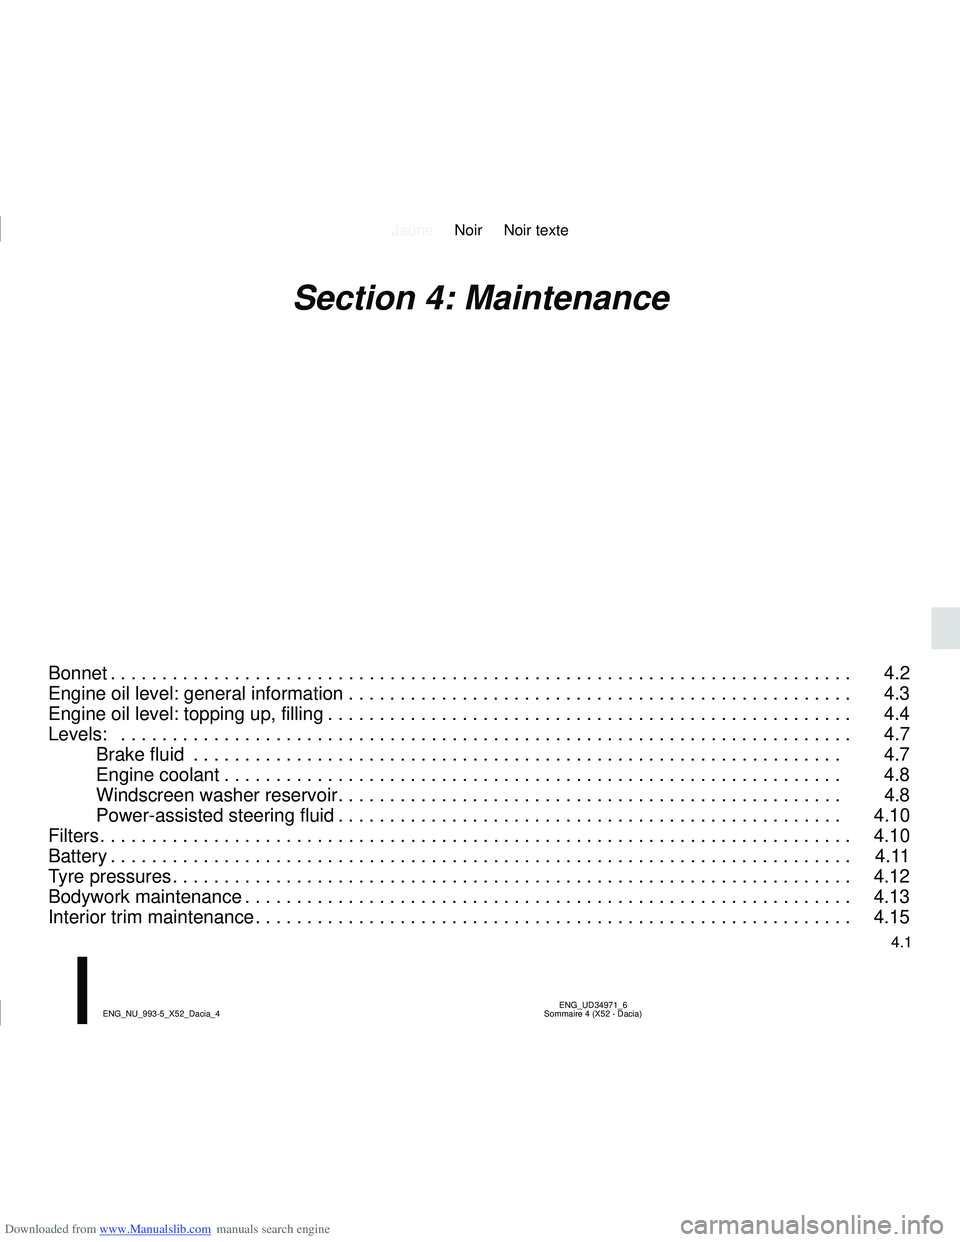 DACIA LOGAN 2014  Owners Manual Downloaded from www.Manualslib.com manuals search engine JauneNoir Noir texte
4.1
ENG_UD34971_6
Sommaire 4 (X52 - Dacia)
ENG_NU_993-5_X52_Dacia_4
Section 4: Maintenance
Bonnet . . . . . . . . . . . . 